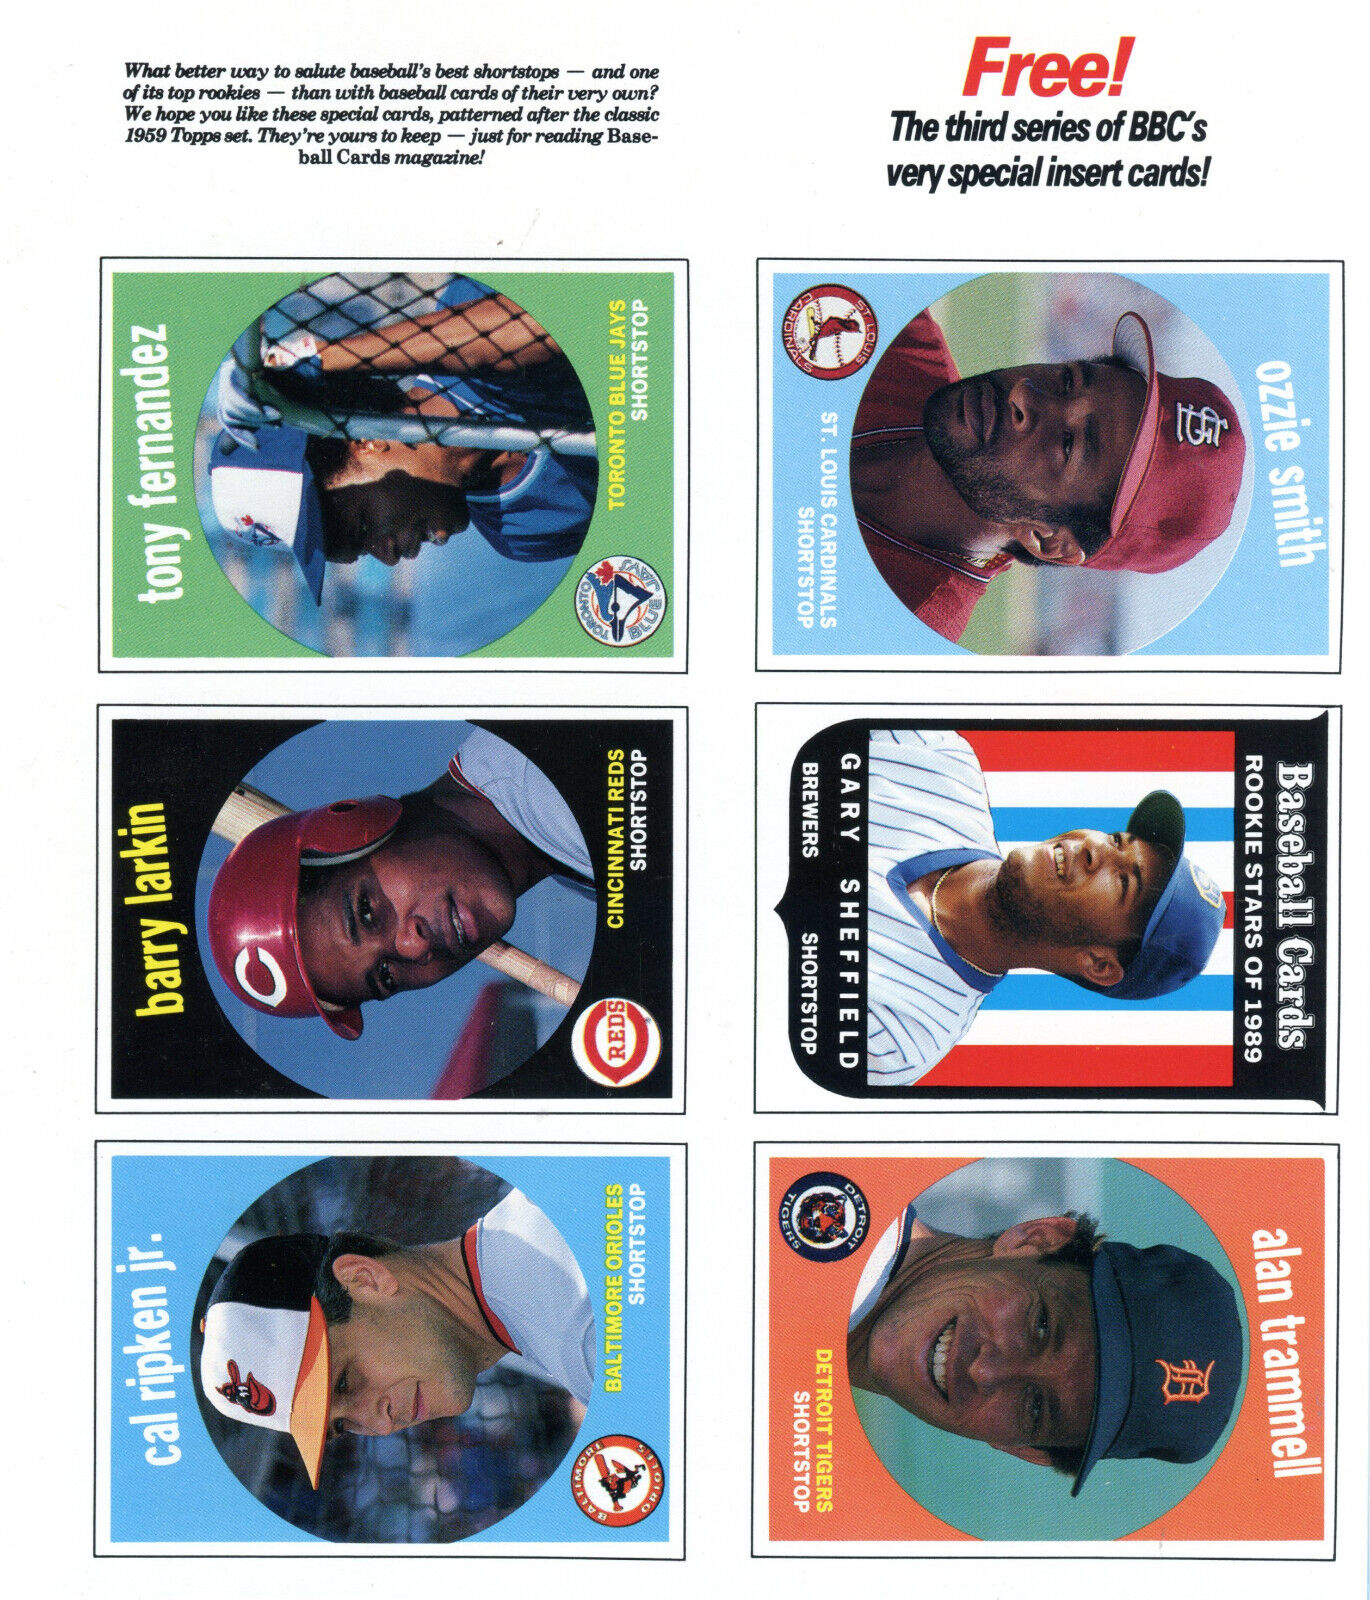 1989 Baseball Cards Magazine 6 card uncut Sheet -- 1959 Topps format 